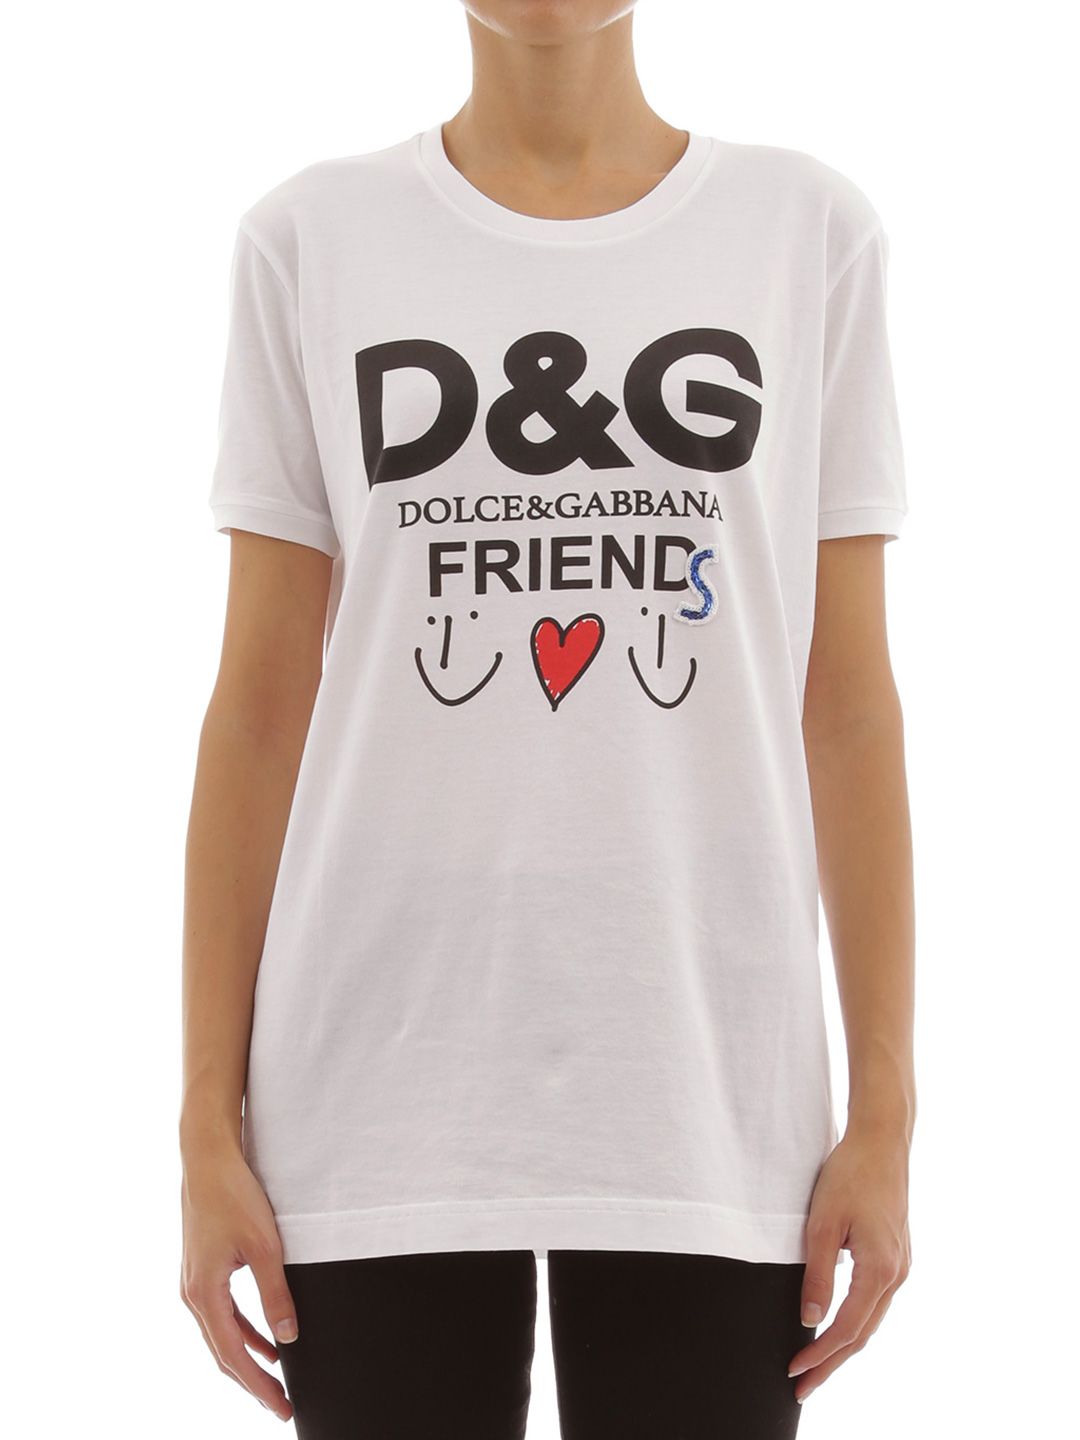 Dolce & Gabbana Dolce & Gabbana White T-shirt Friends - White ...